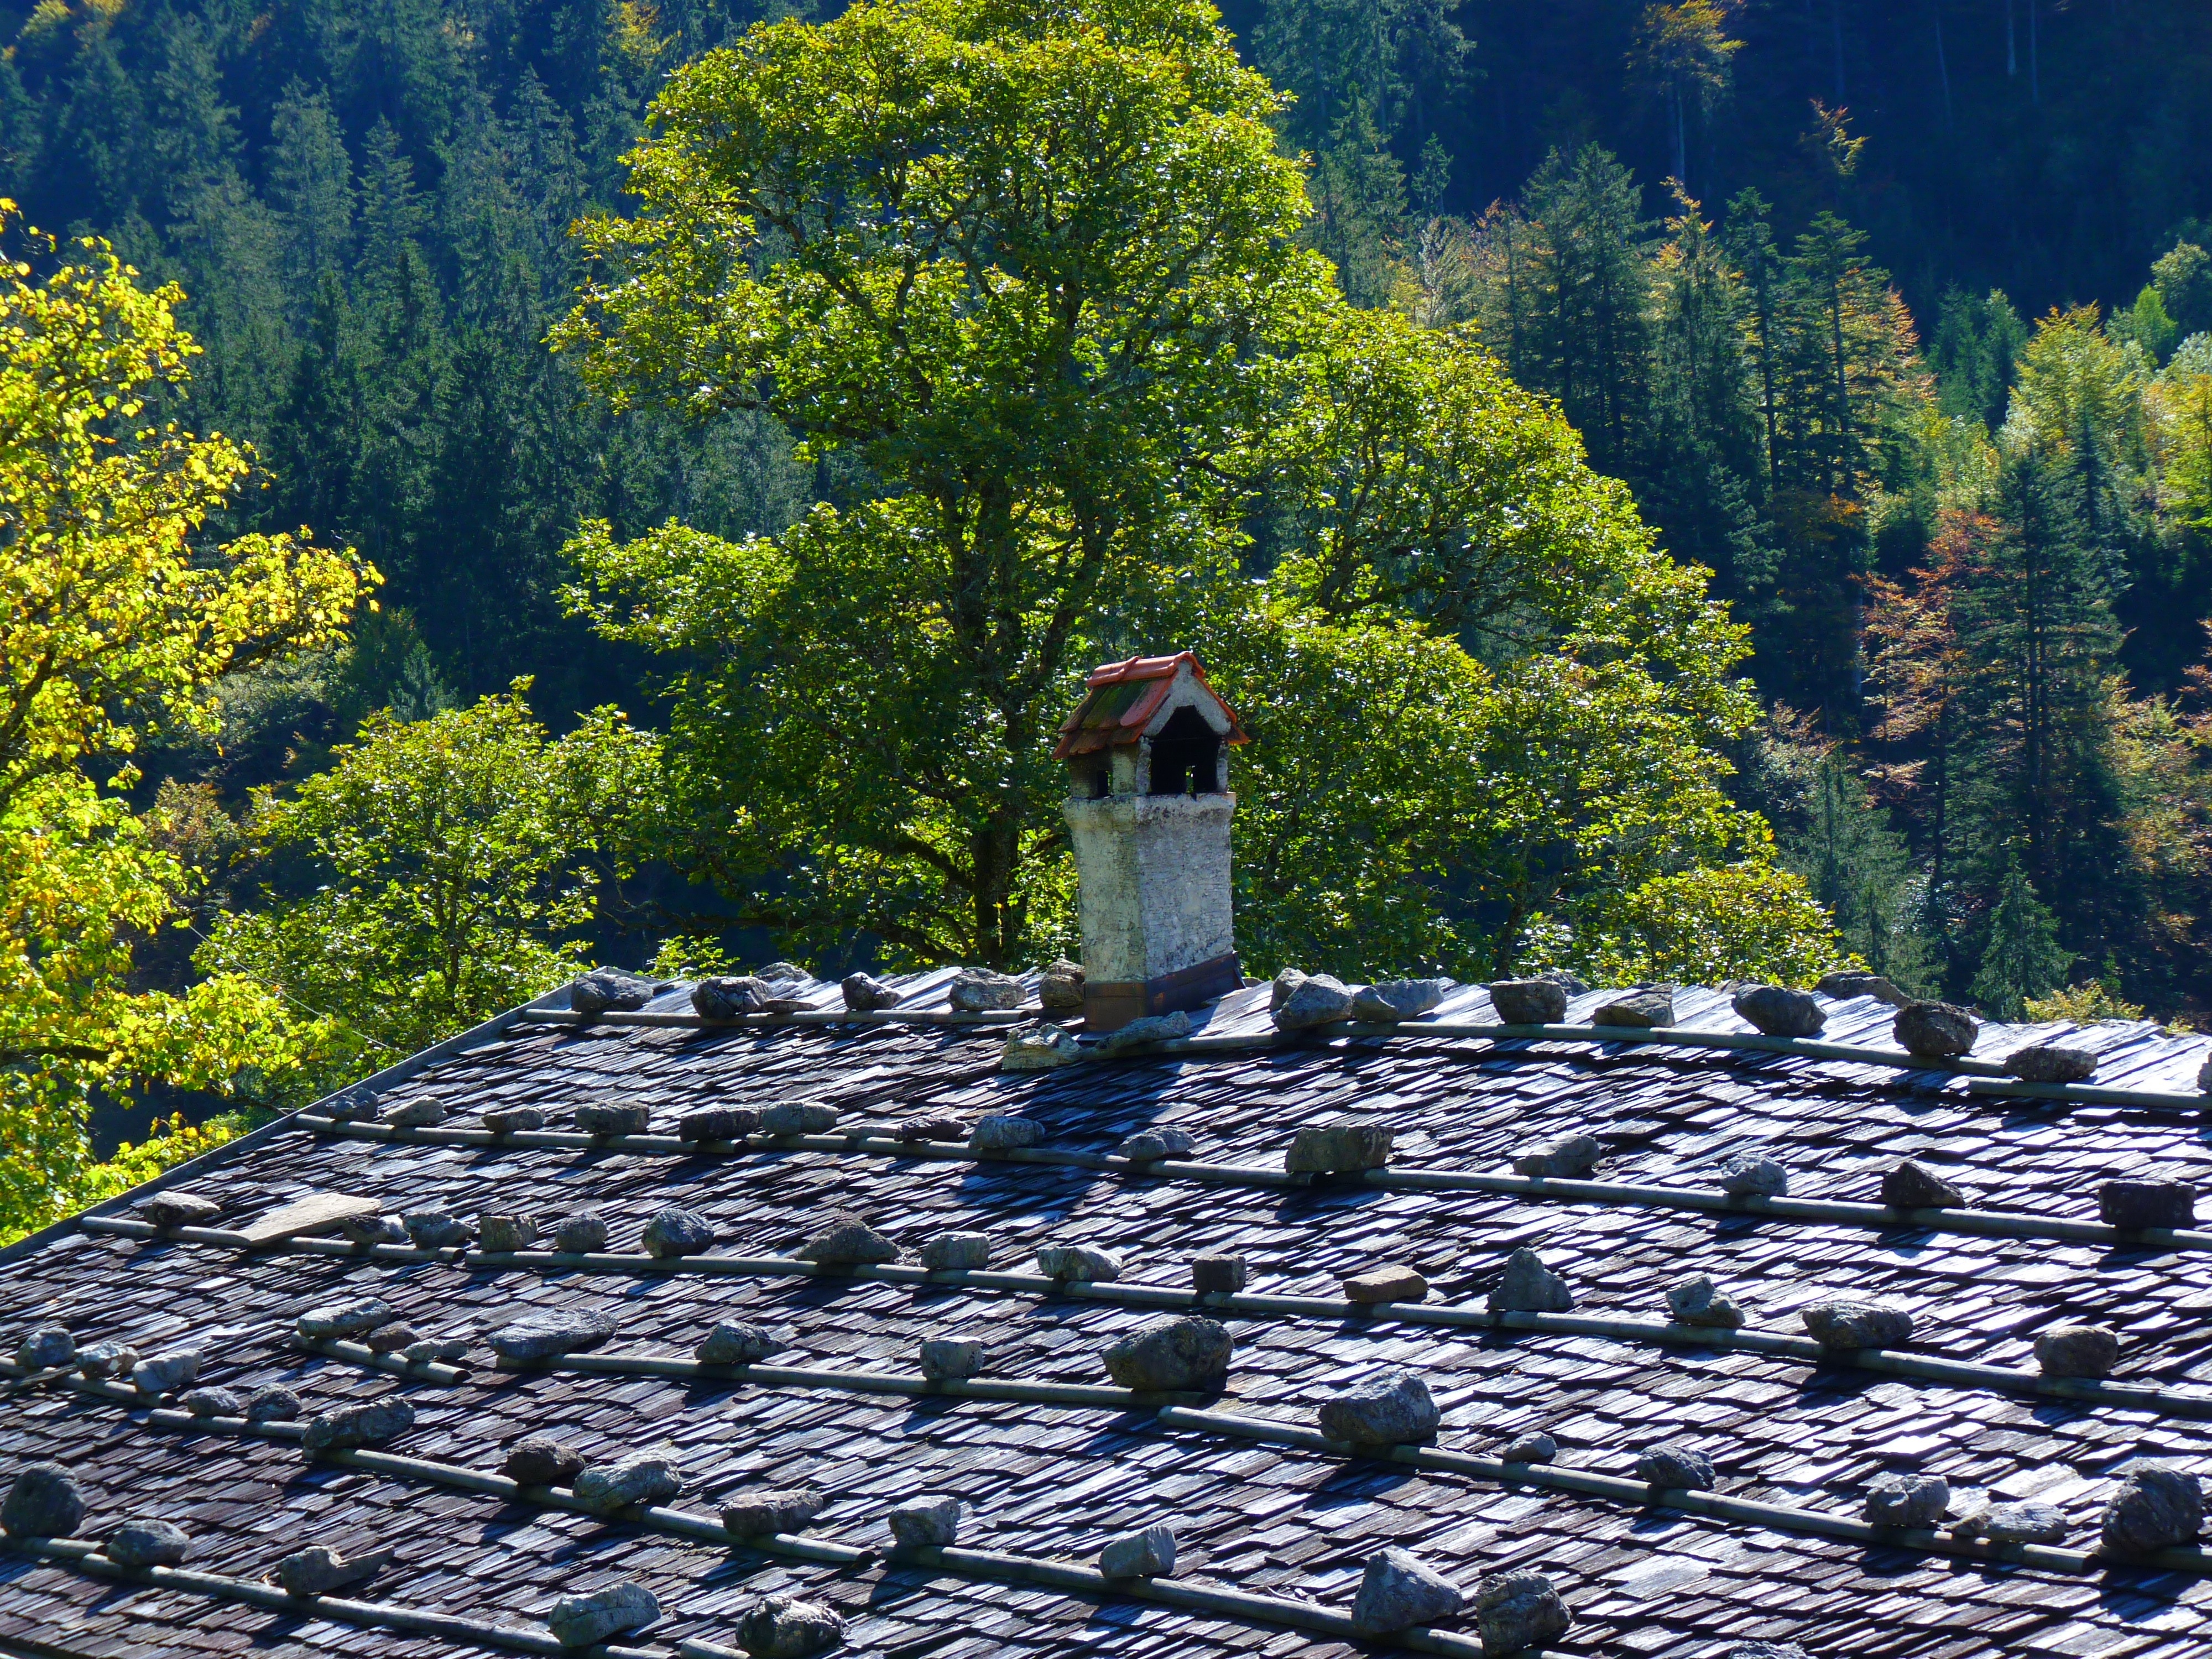 grey and brown ceramic roof